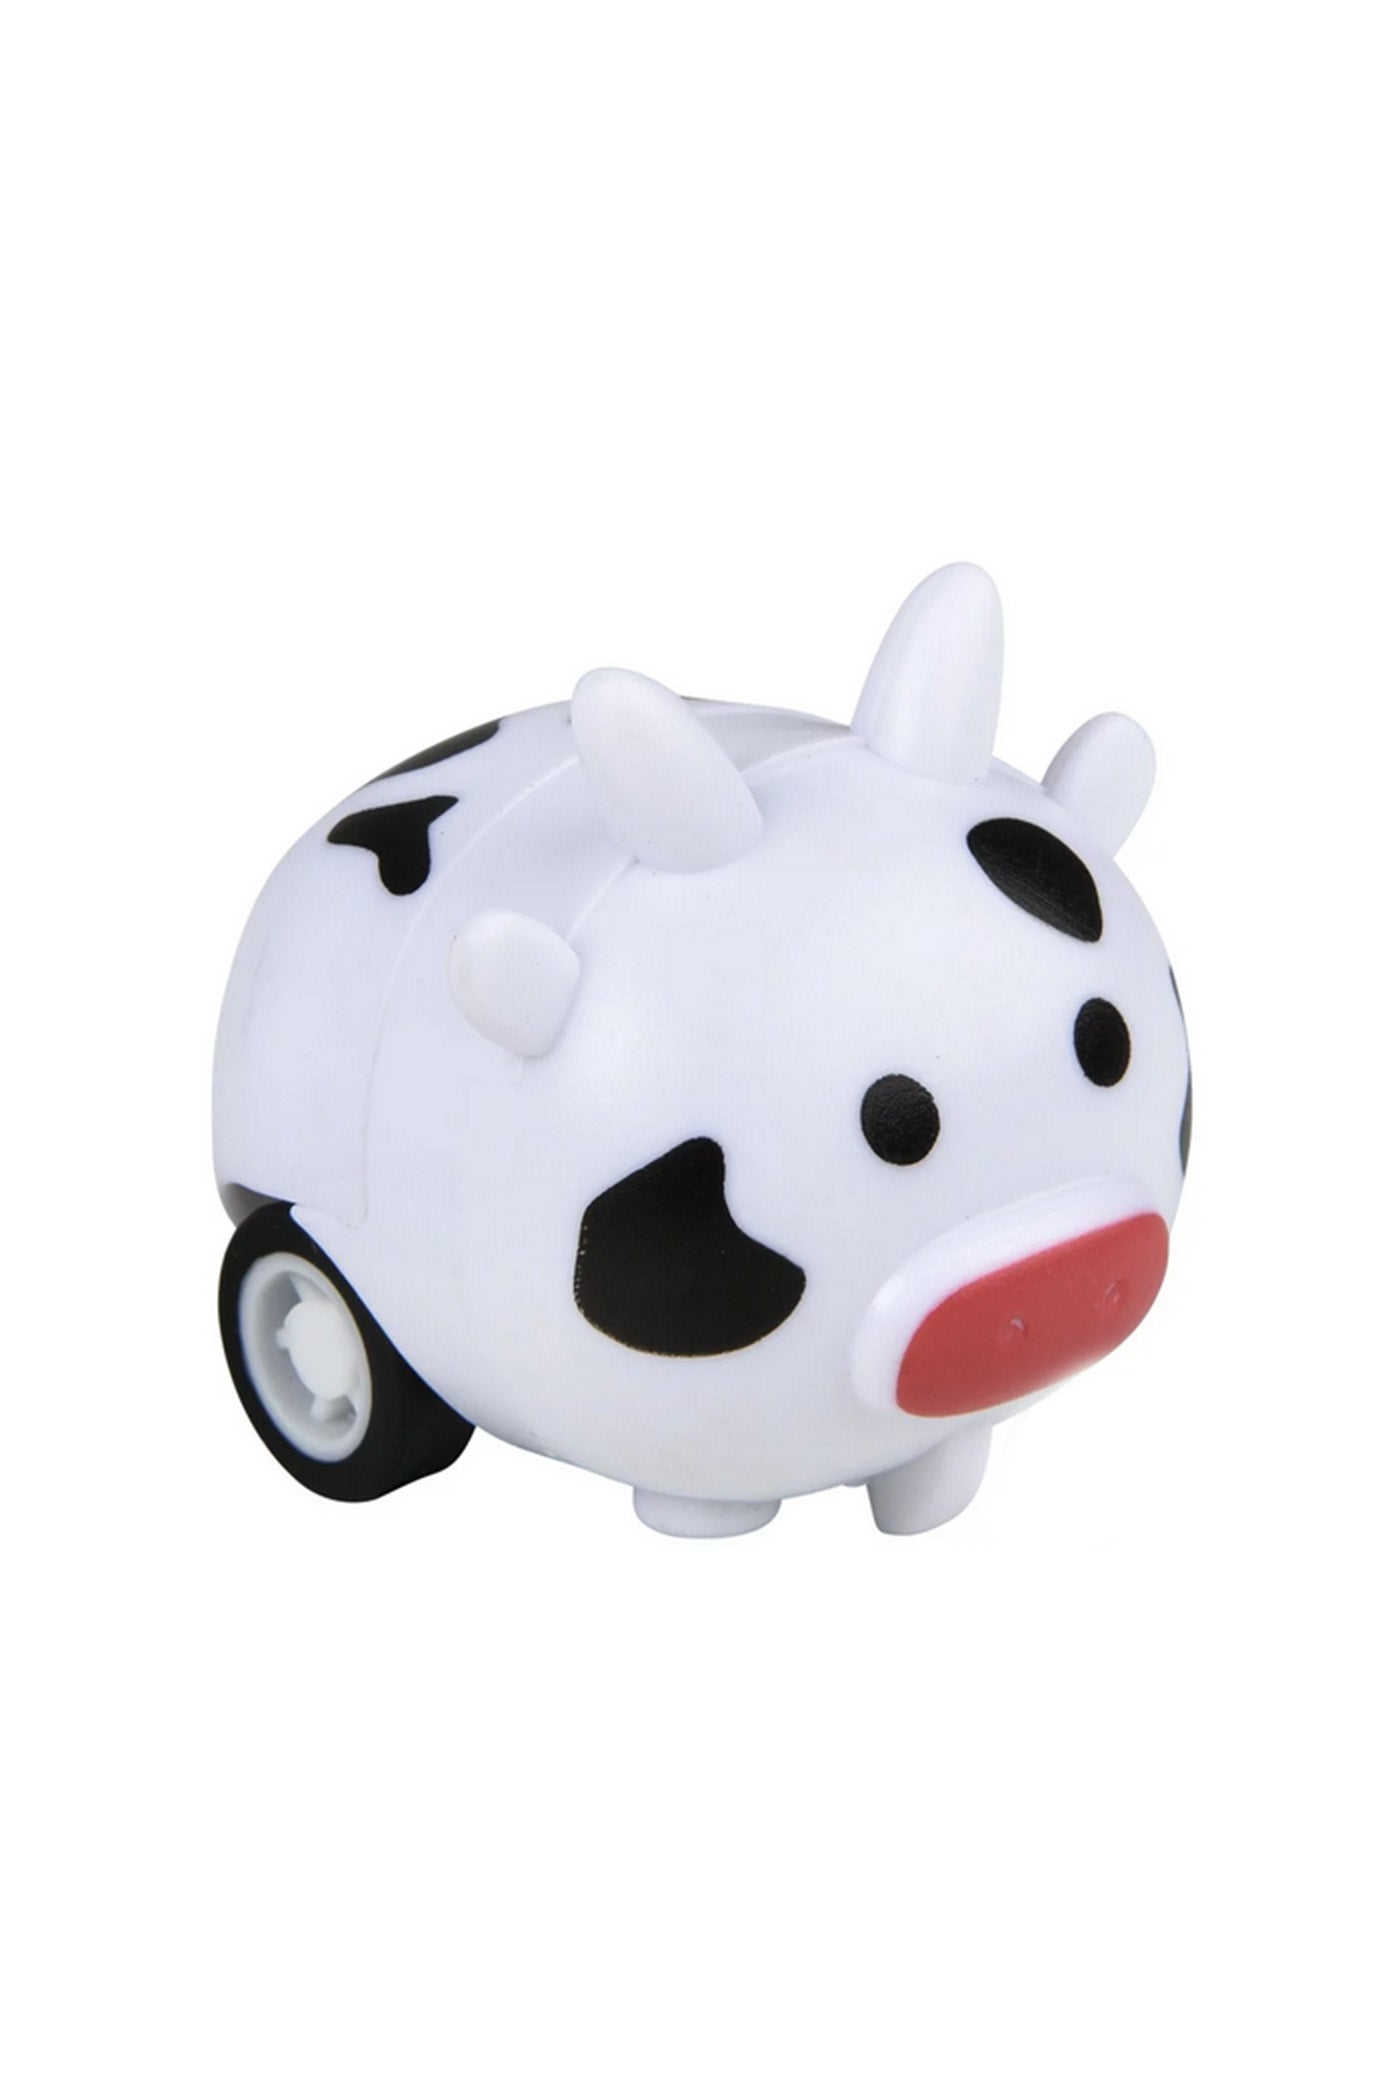 1.5" Mini Animal Pull Back Car Kids Toy